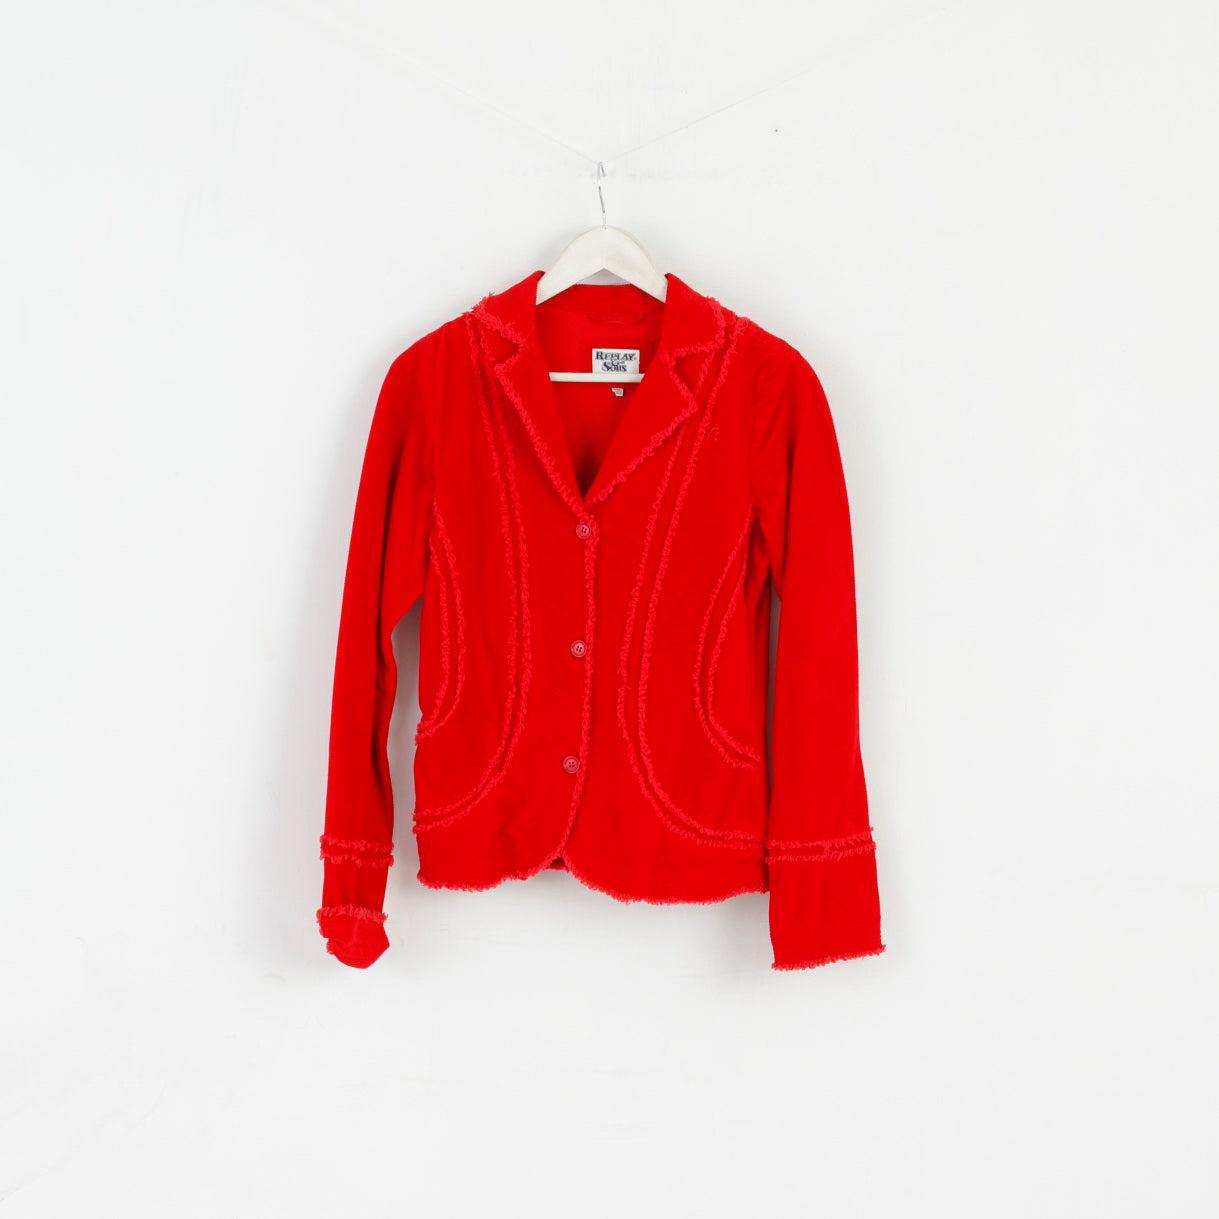 Replay & Sons Girls XXL 16 Age Blazer Red Jacket Cotton Corduroy Top